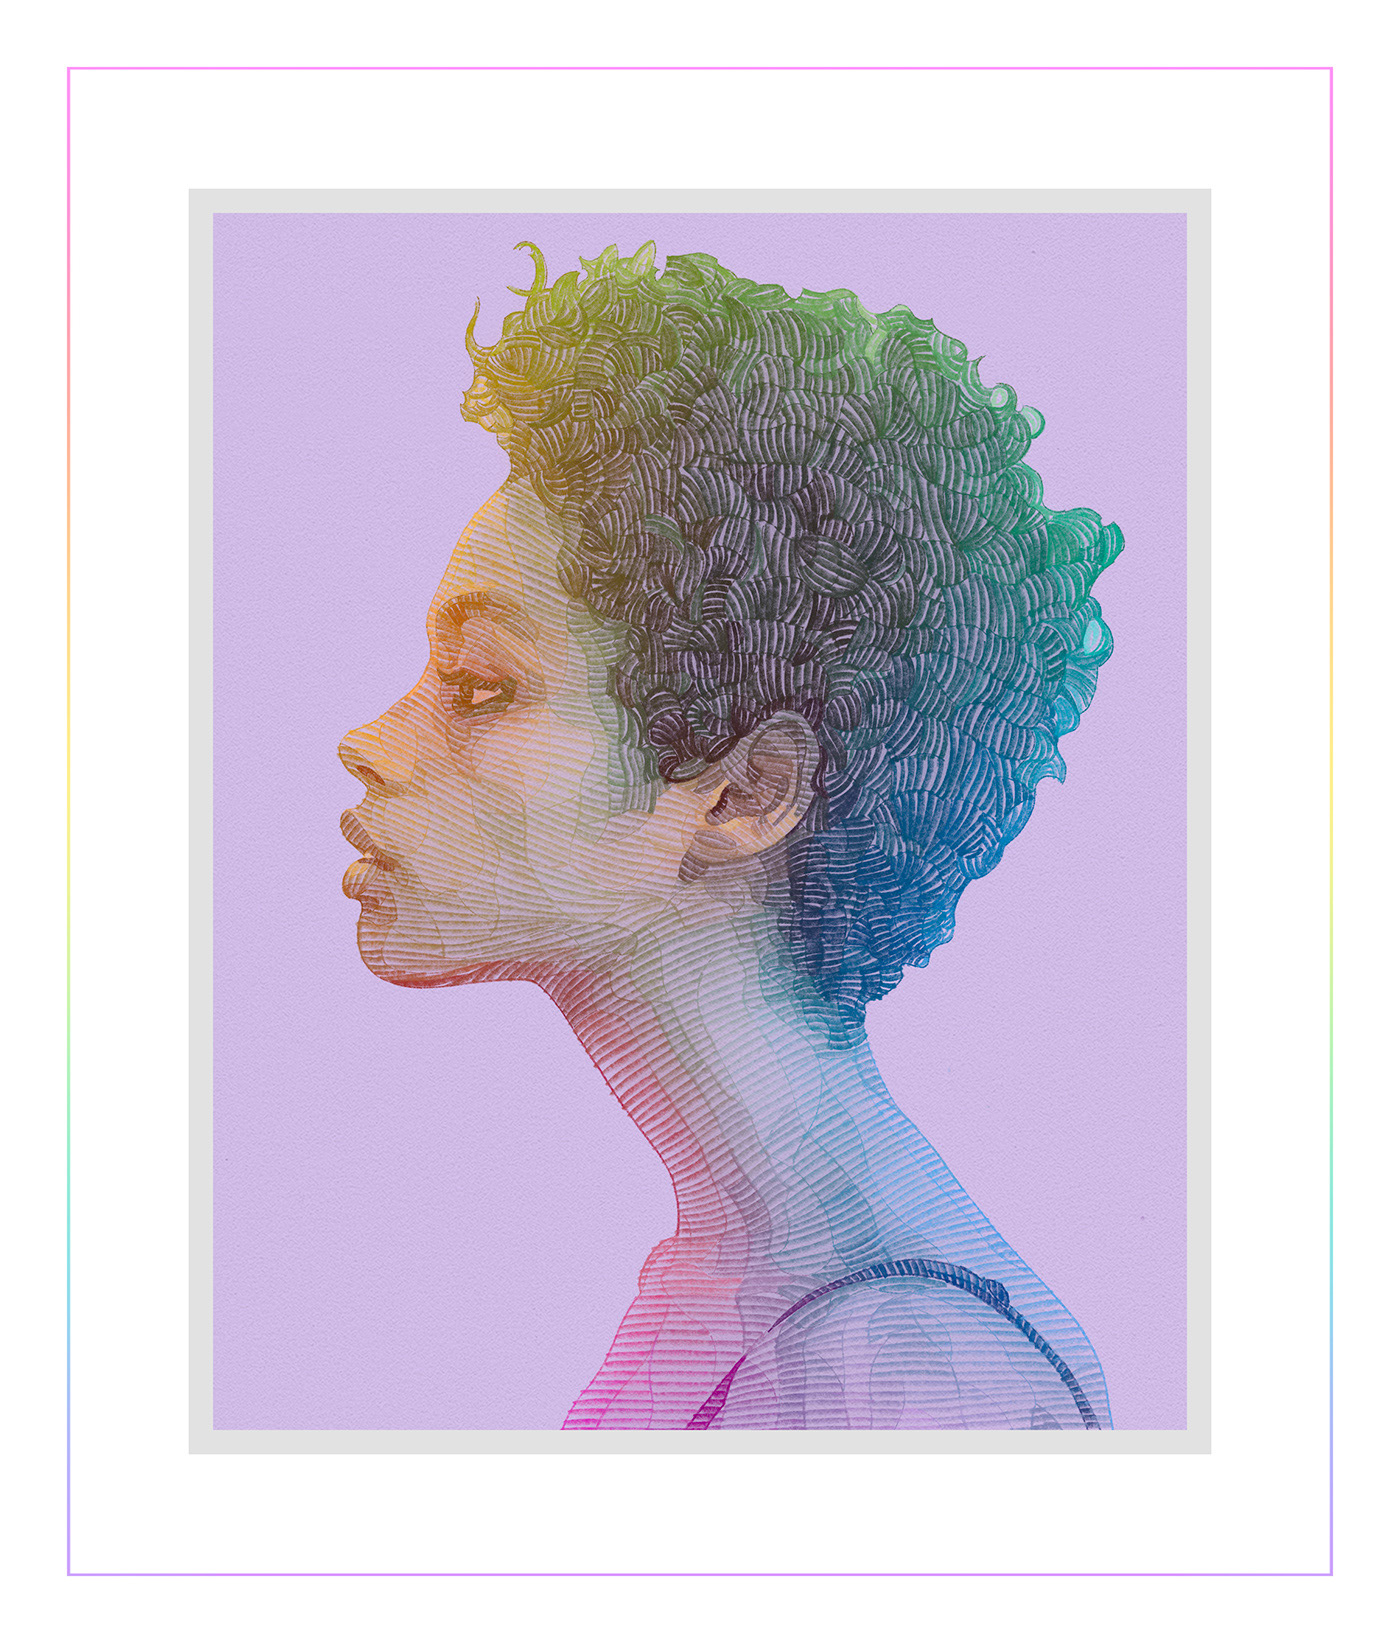 colorful Digital Art  Drawing  hand drawn ILLUSTRATION  portrait Procreate